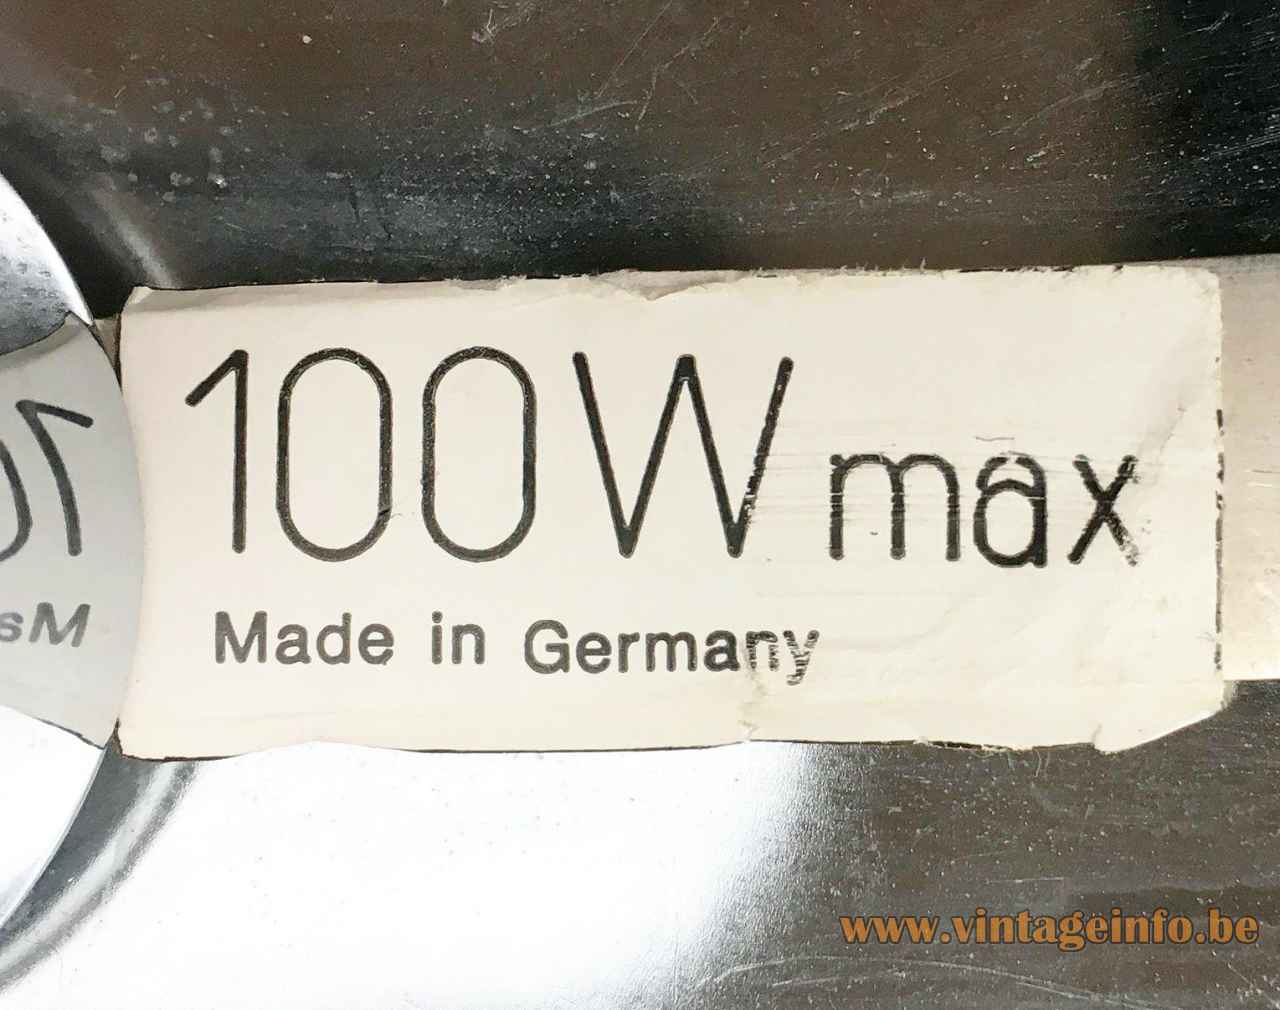 Staff spiral floor lamp rectangular white paper label 100 Watt maximum made in Germany 1970s 